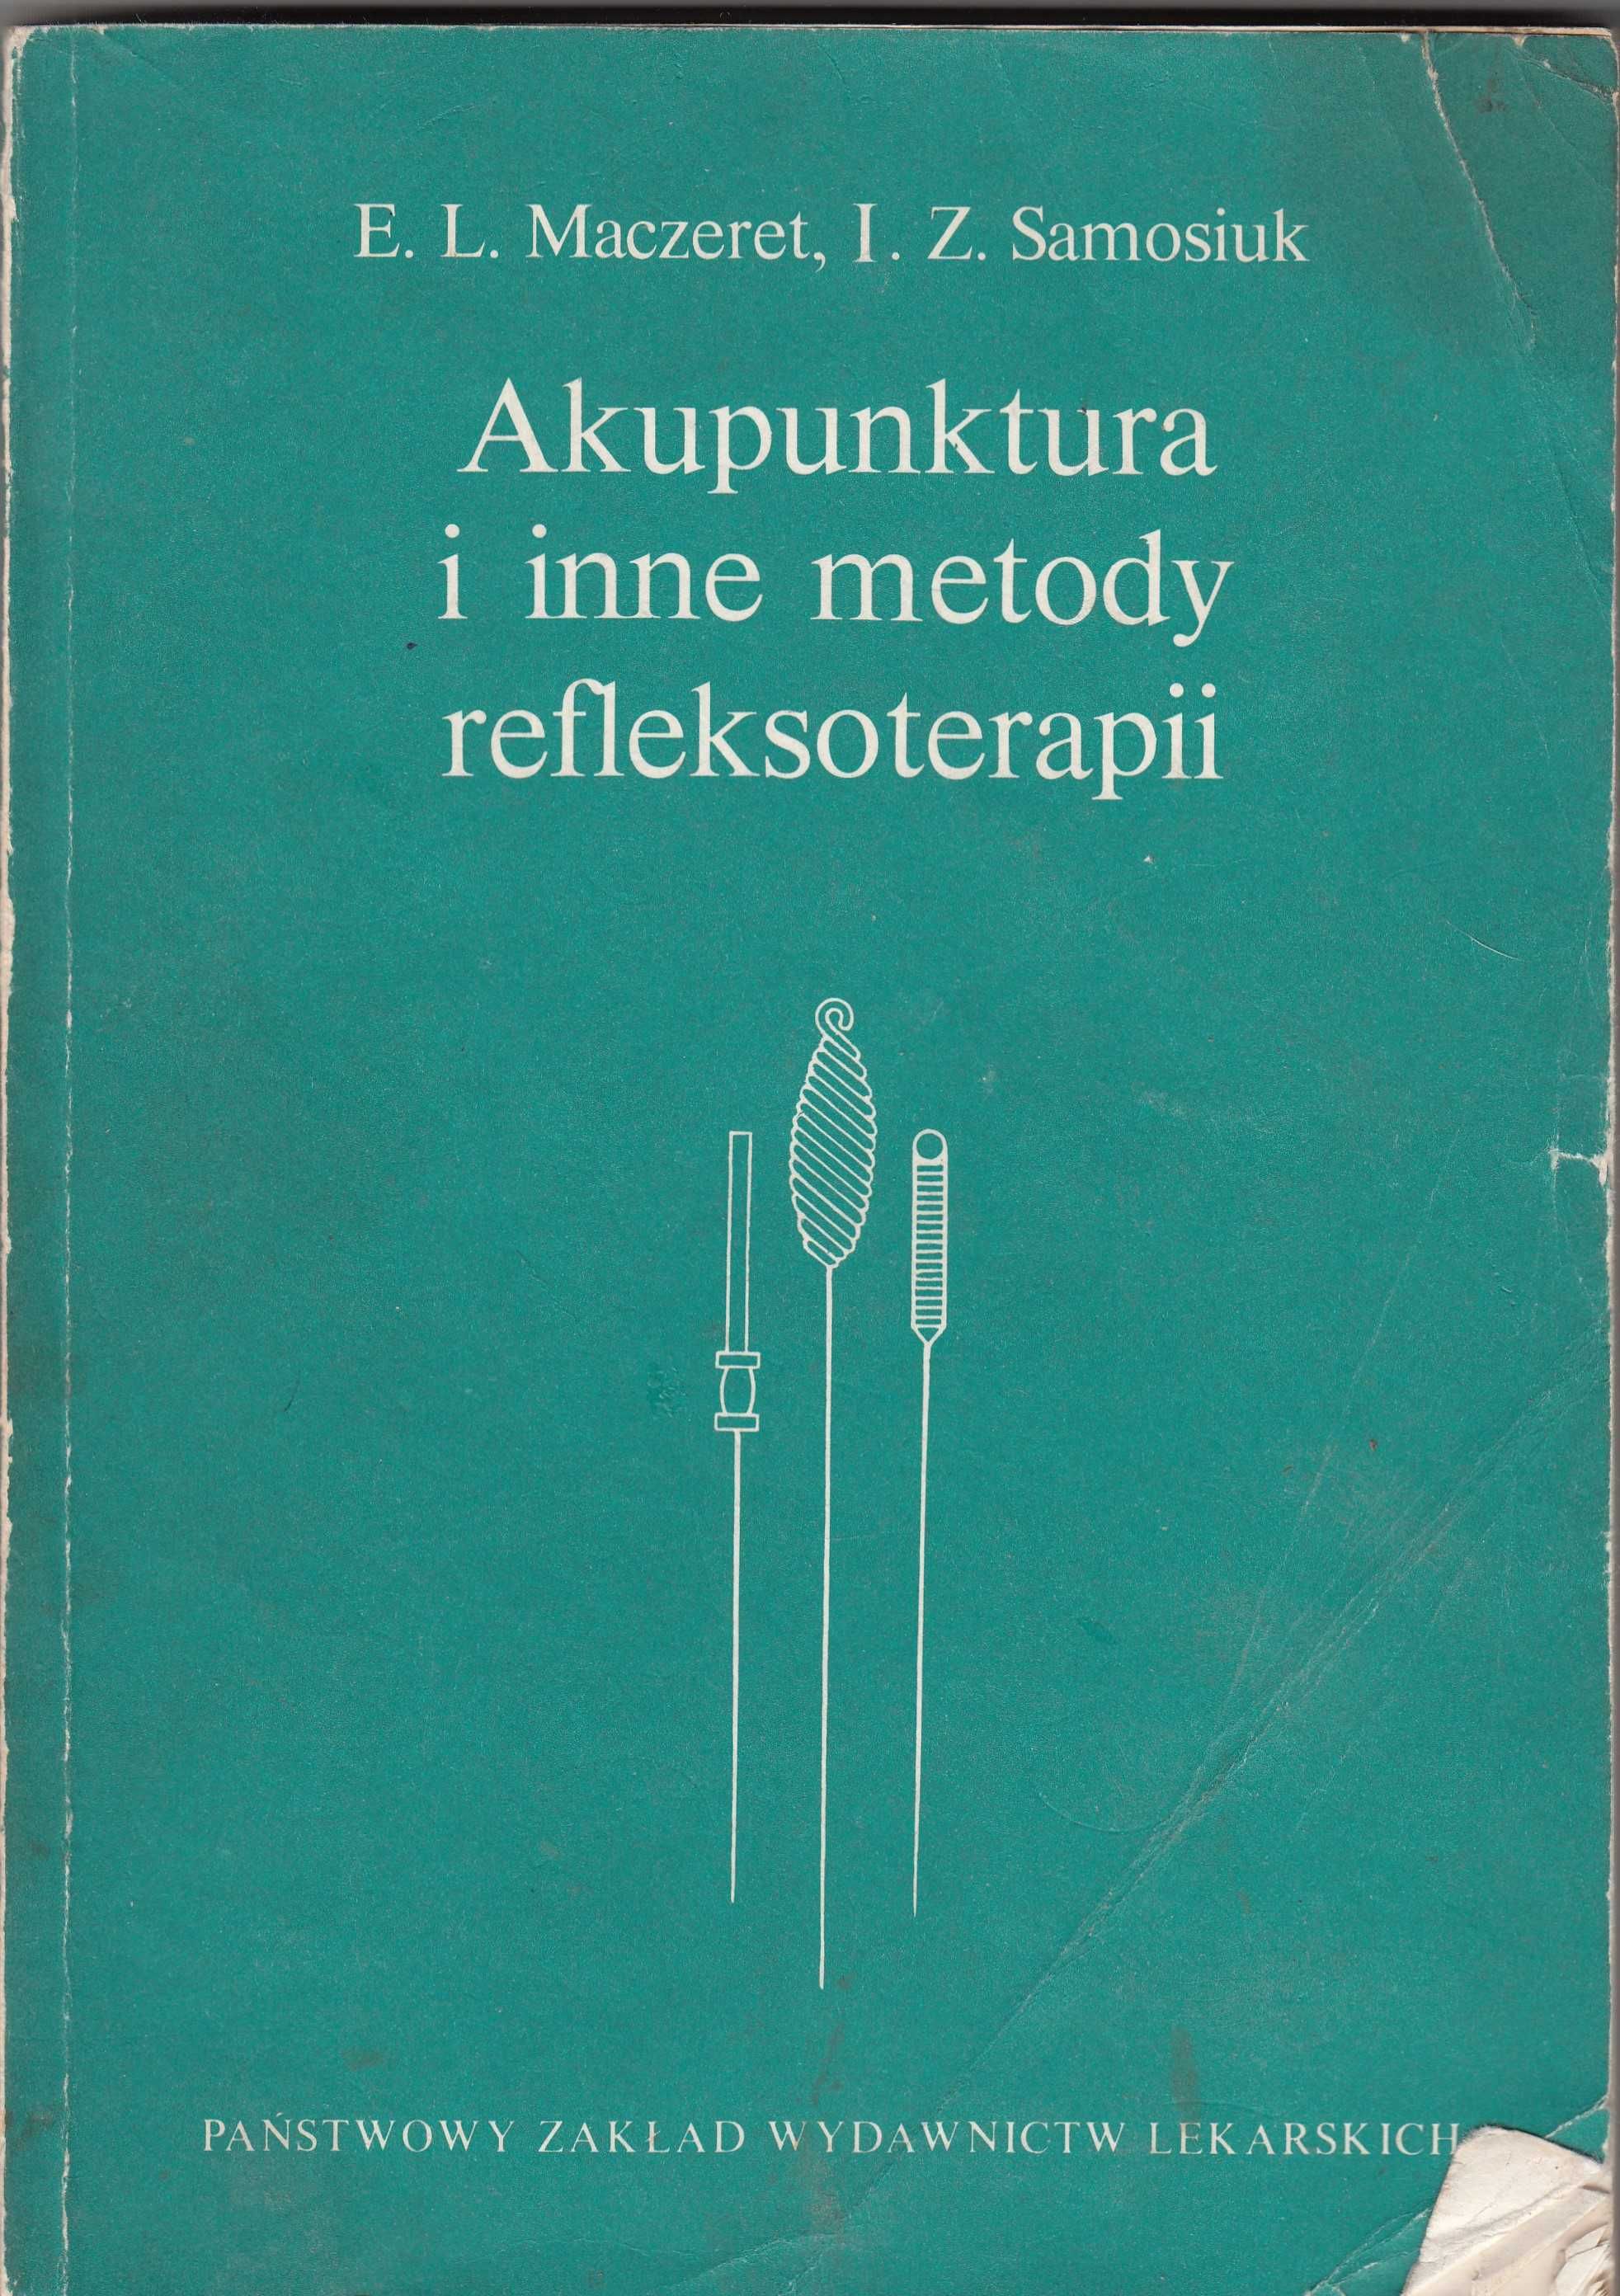 Akupunktura i inne metody refleksoterapii - Maczeret, Samosiuk